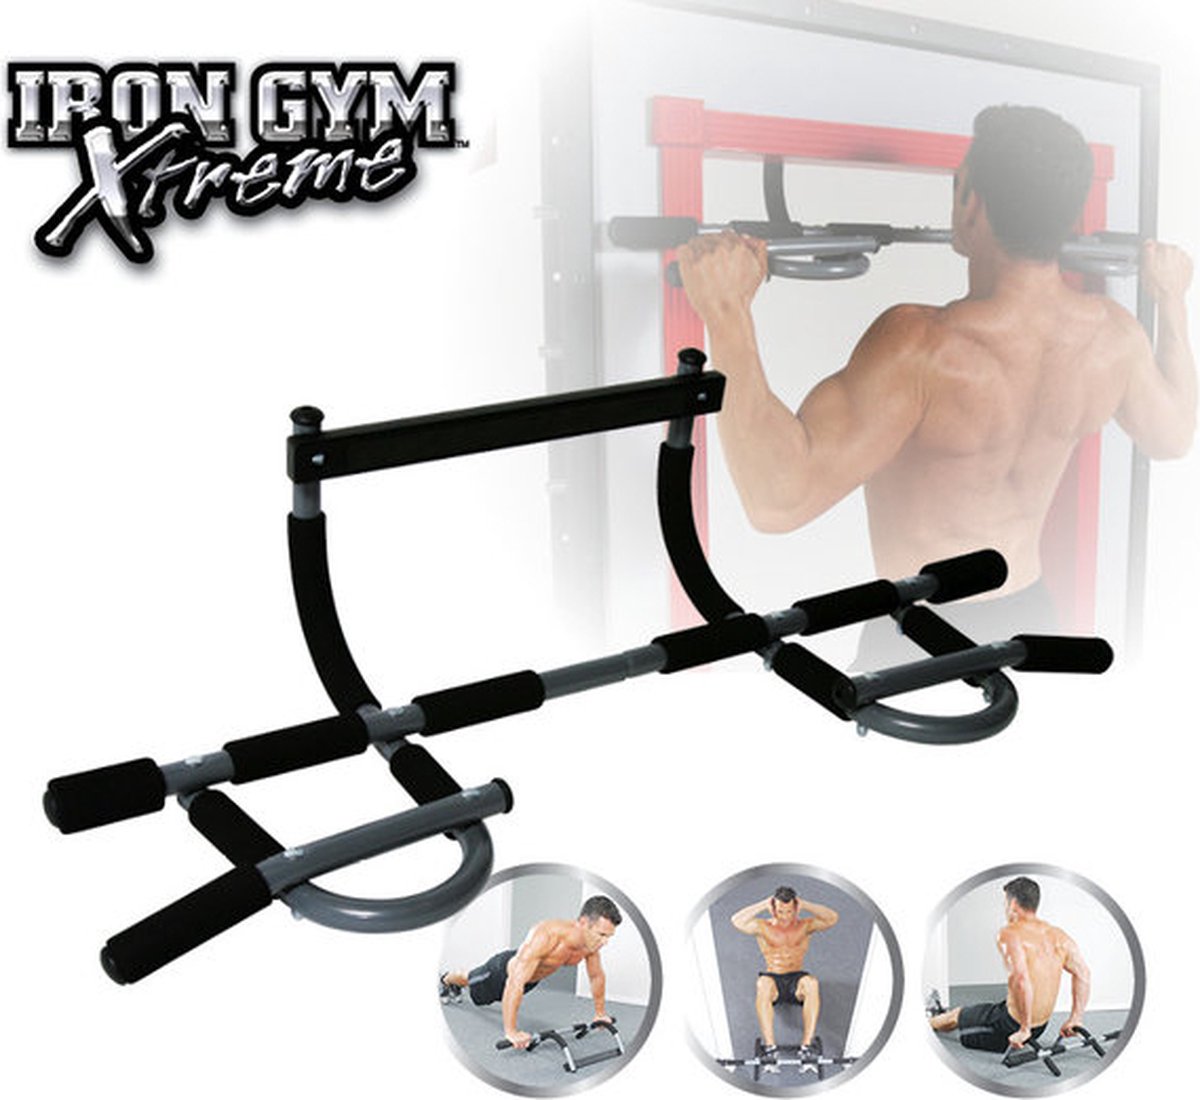 Menagerry Verfijning projector Iron Gym Xtreme - Fitness trainer - Metaal - Zwart | bol.com